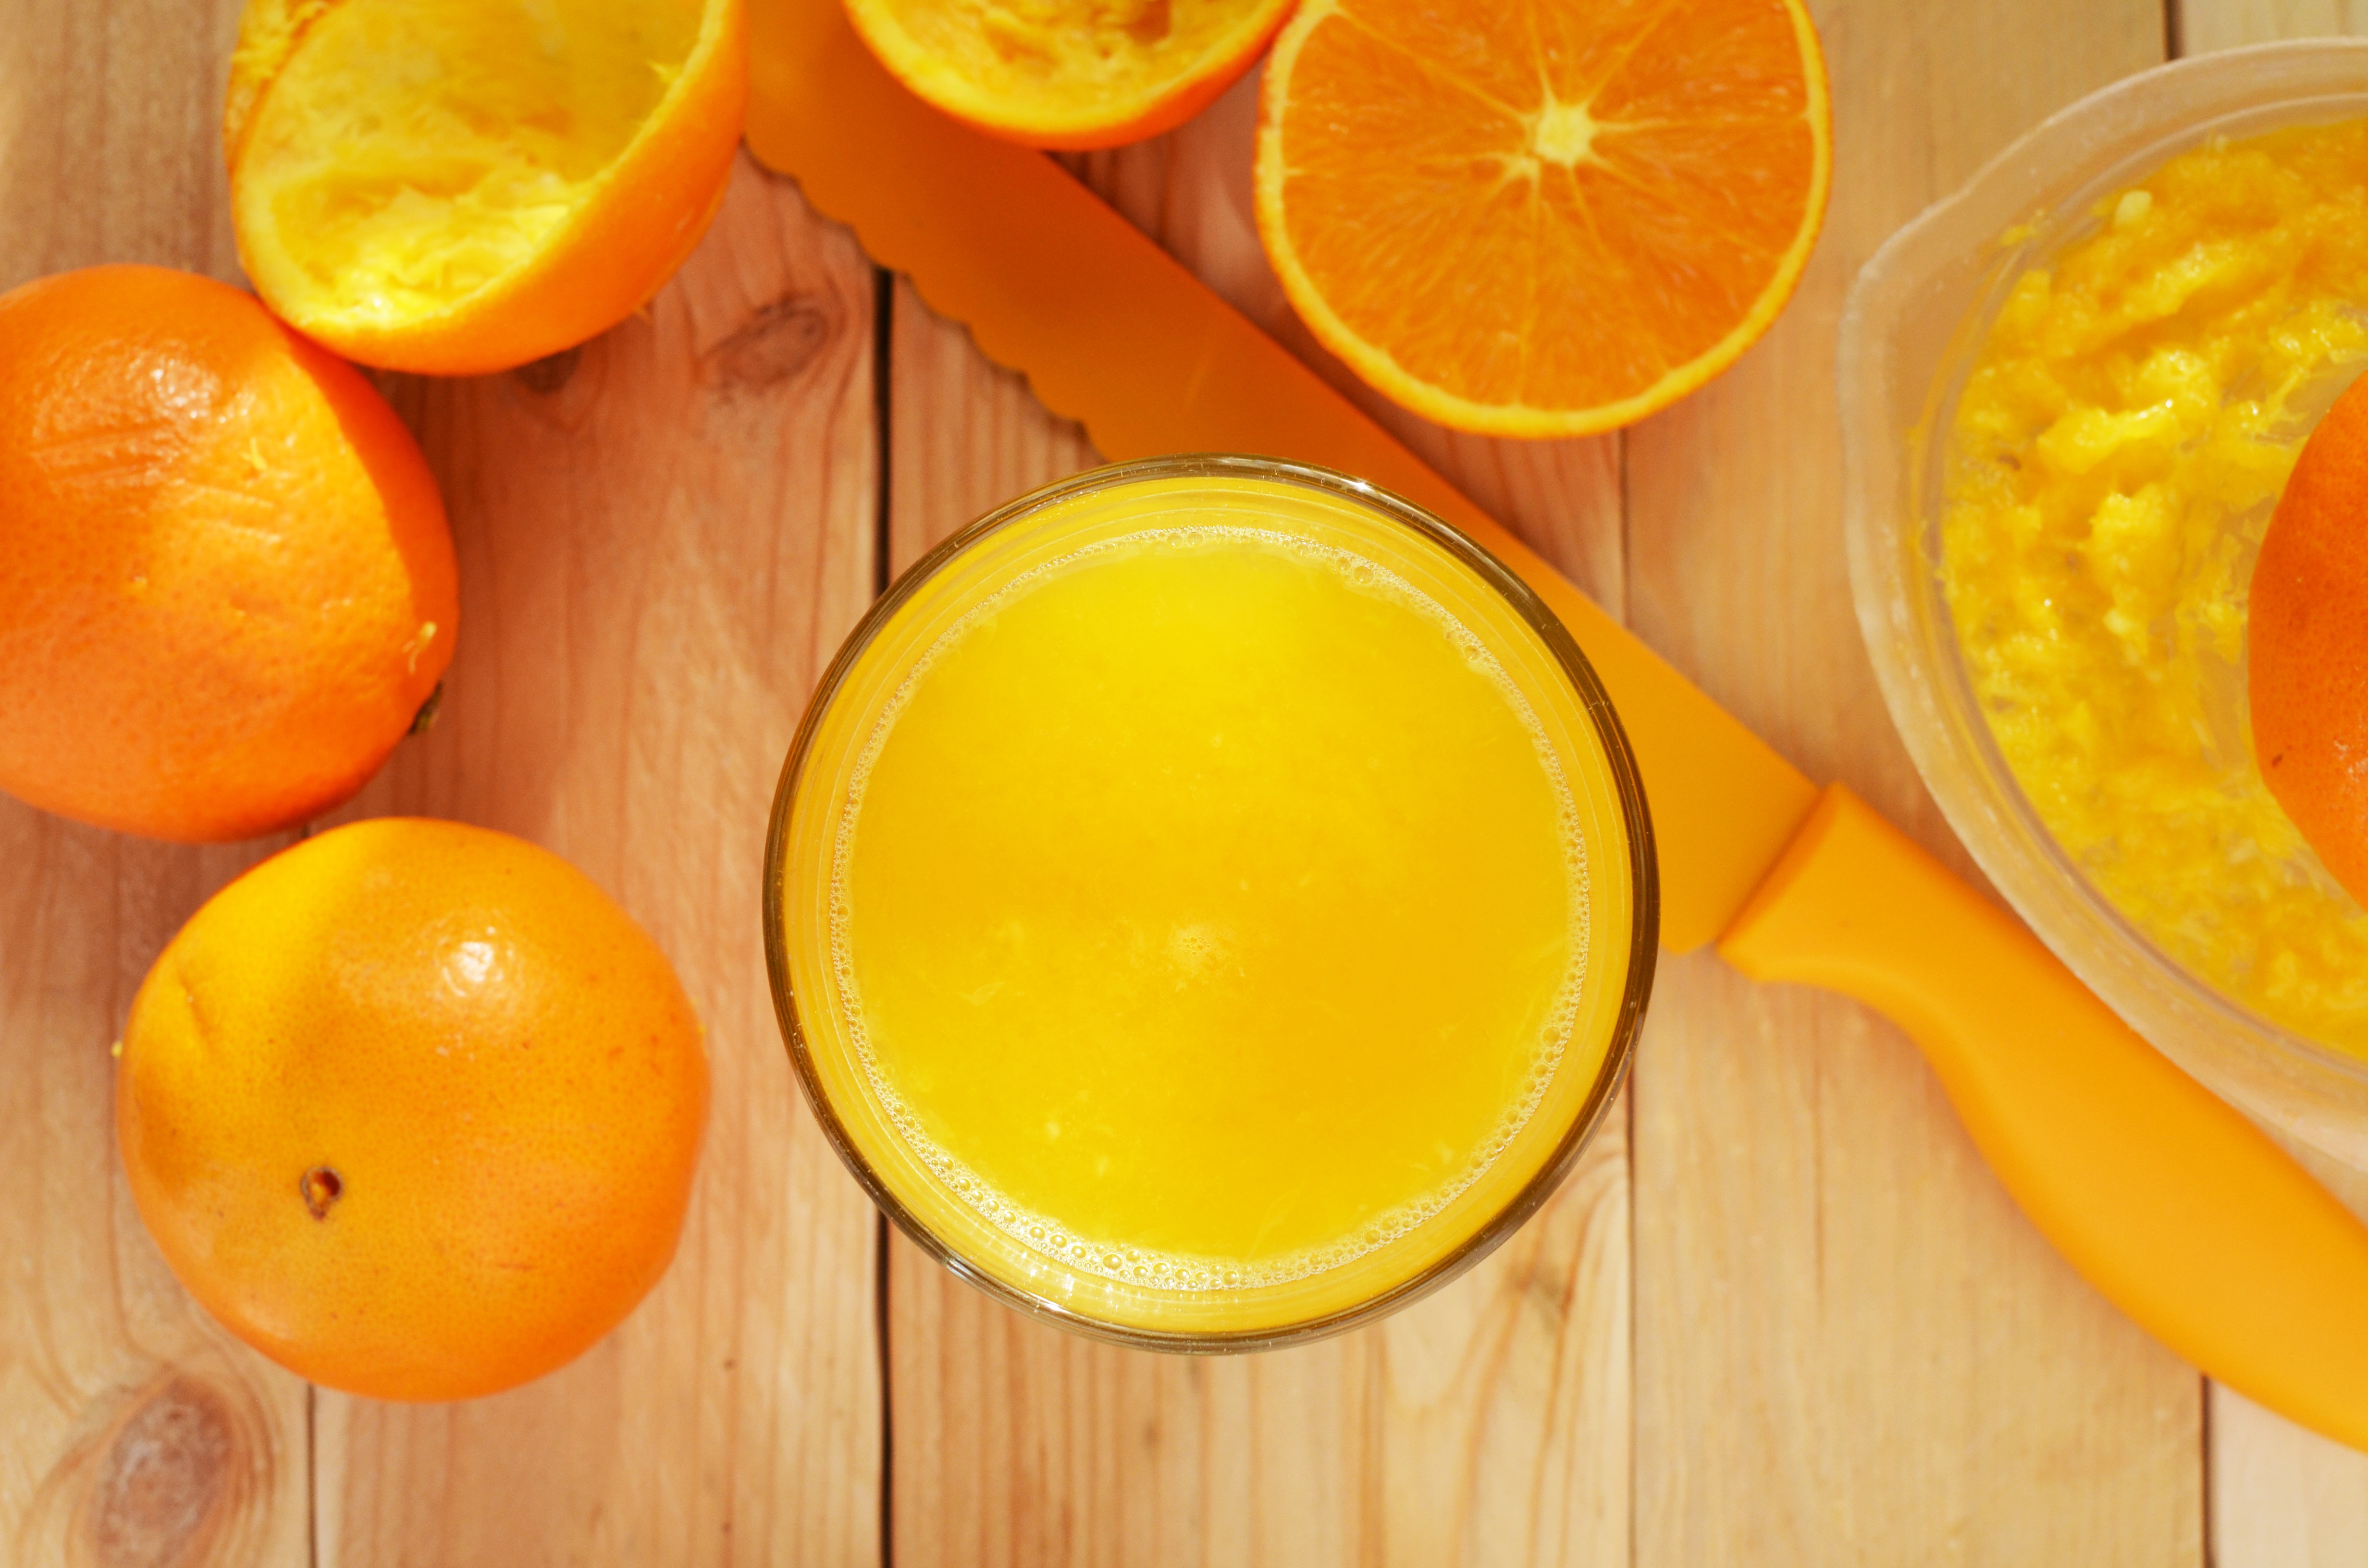 Orange Juice Health Benefits - Is Orange Juice Good for You?